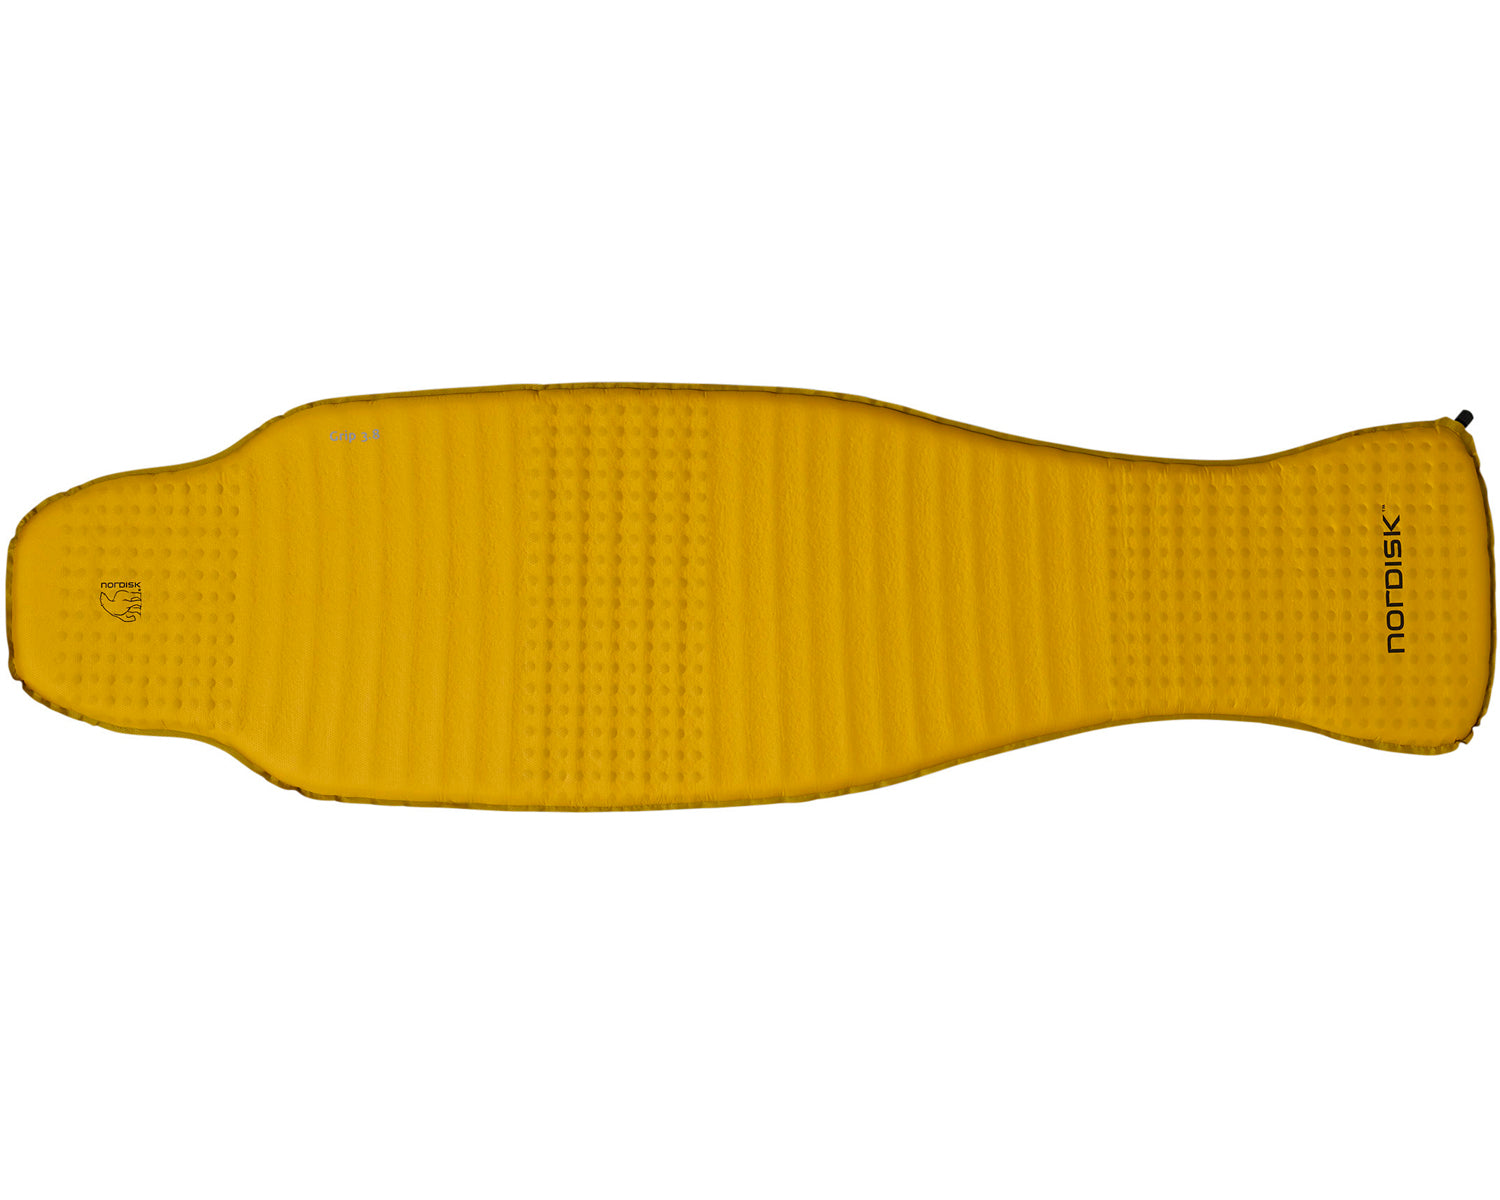 Grip 3.8 - Mustard Yellow